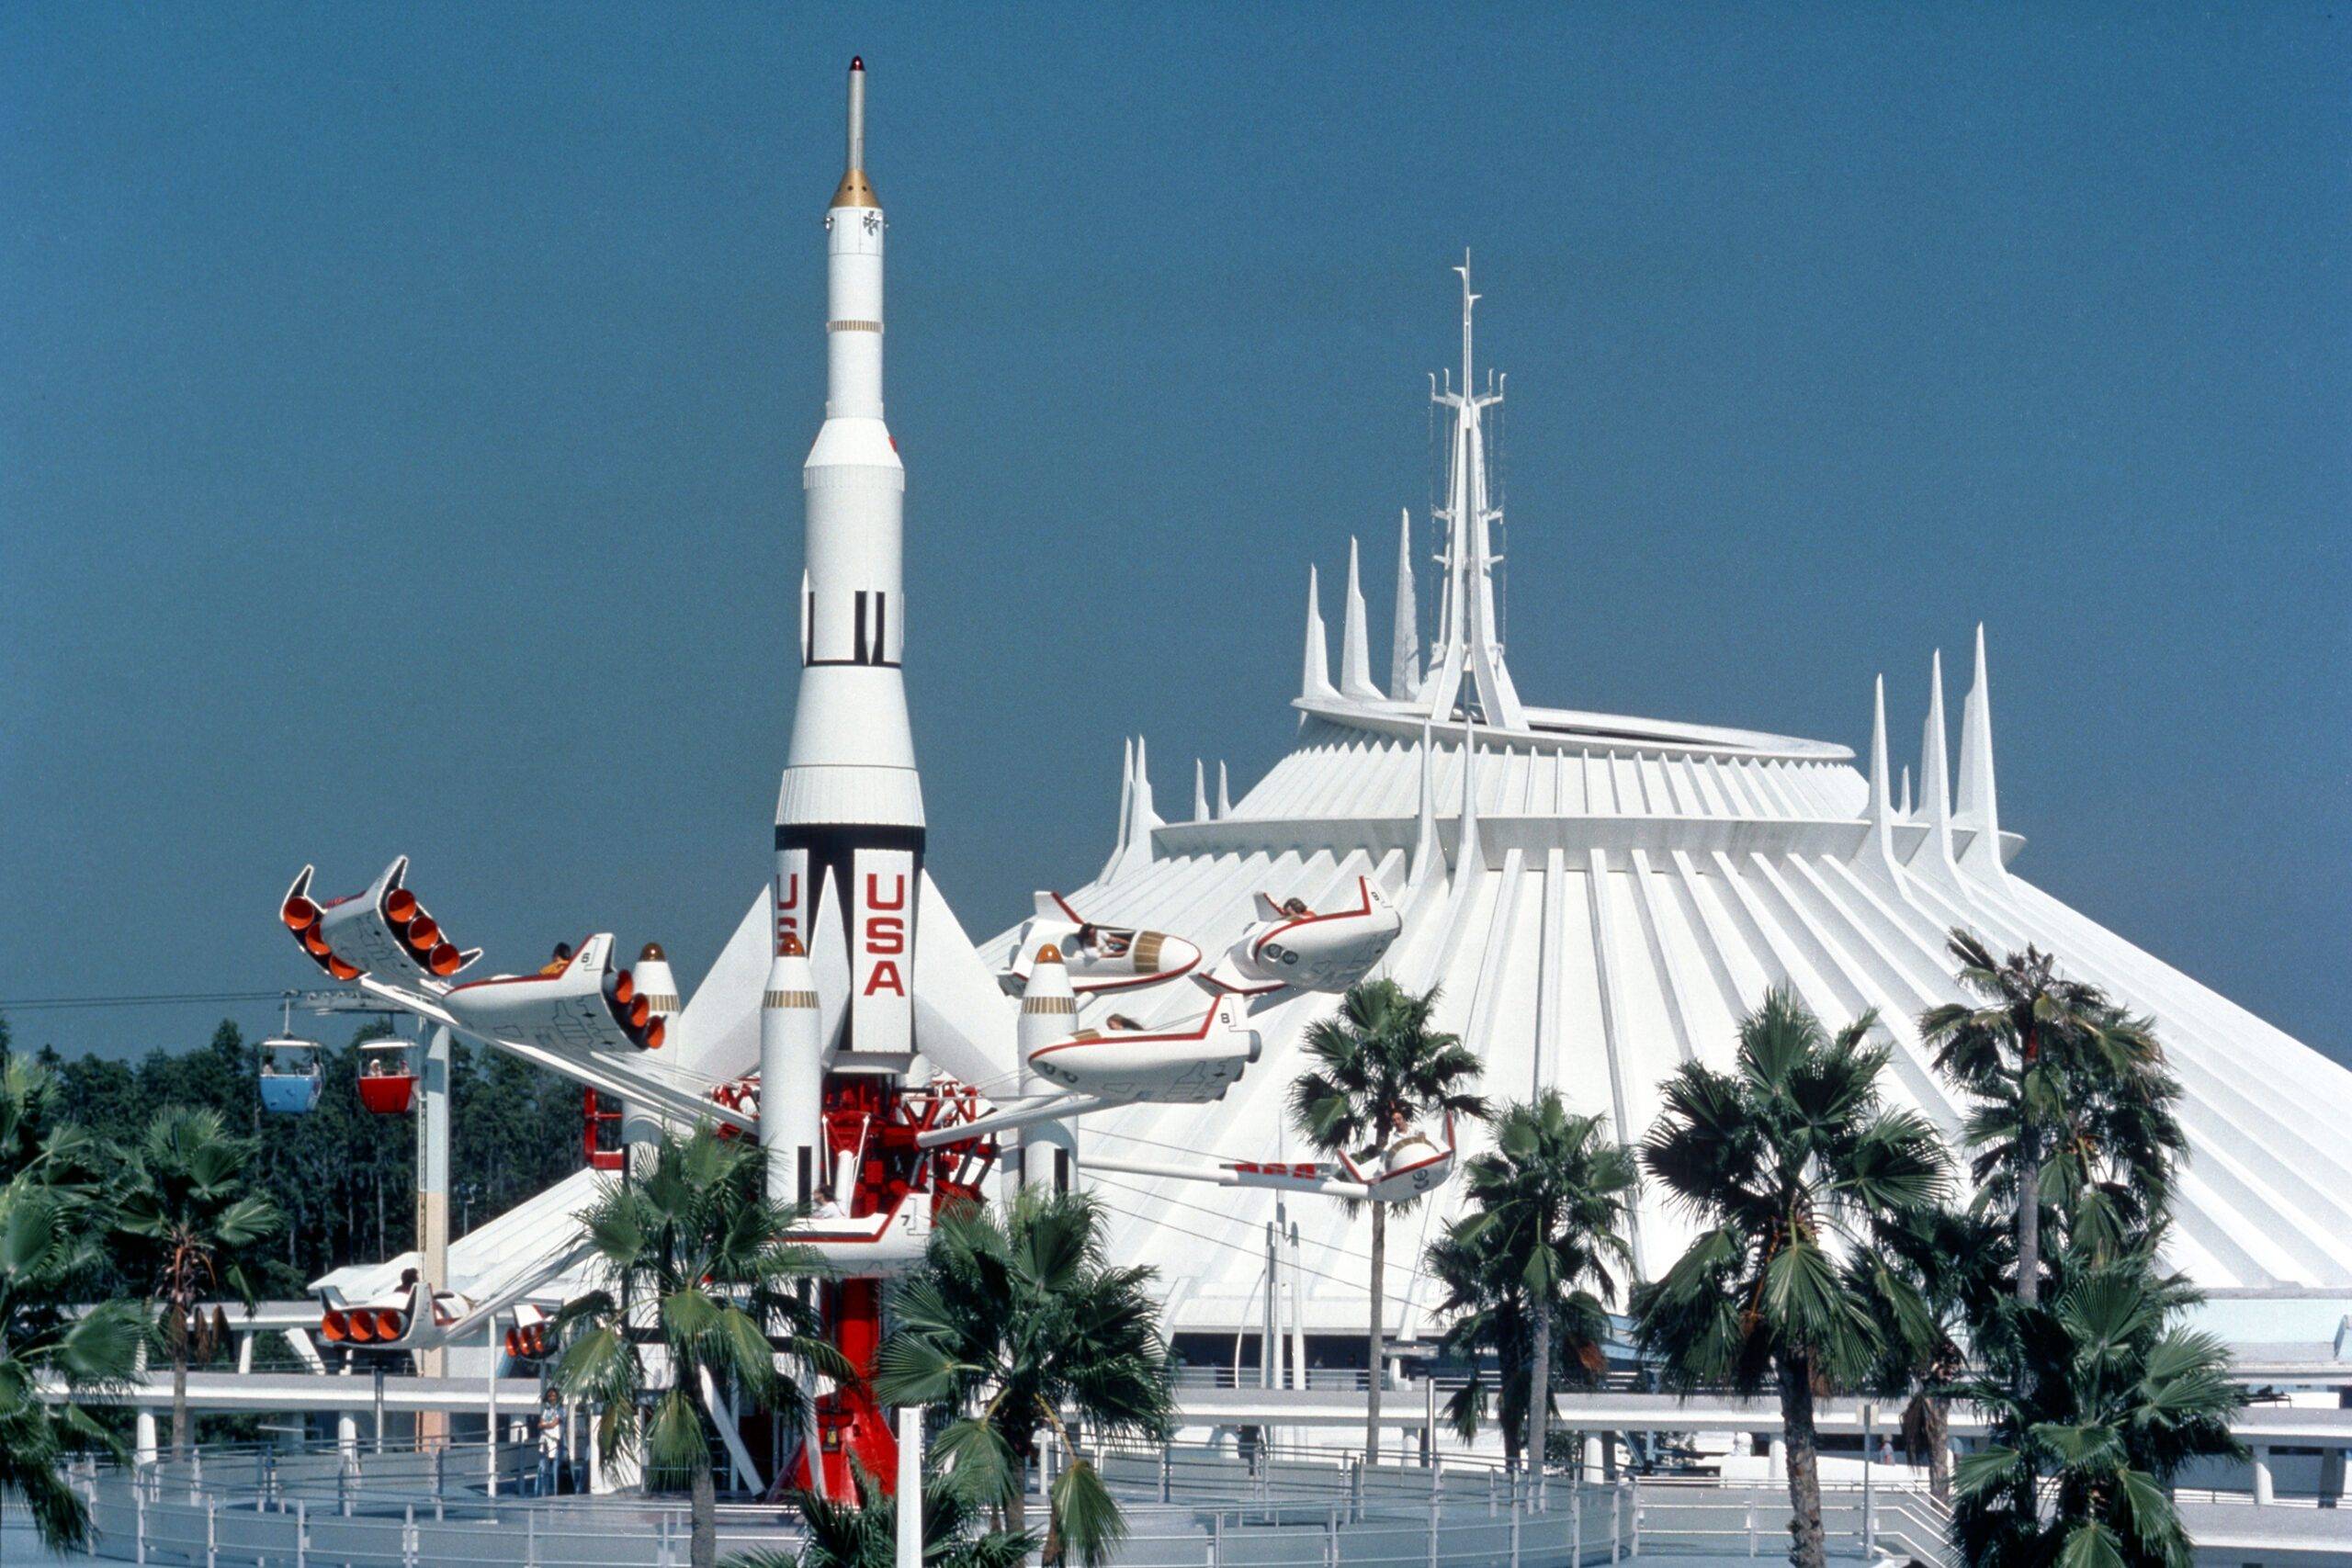 Tomorrowland at Magic Kingdom Park in 1976 at Walt Disney World Resort